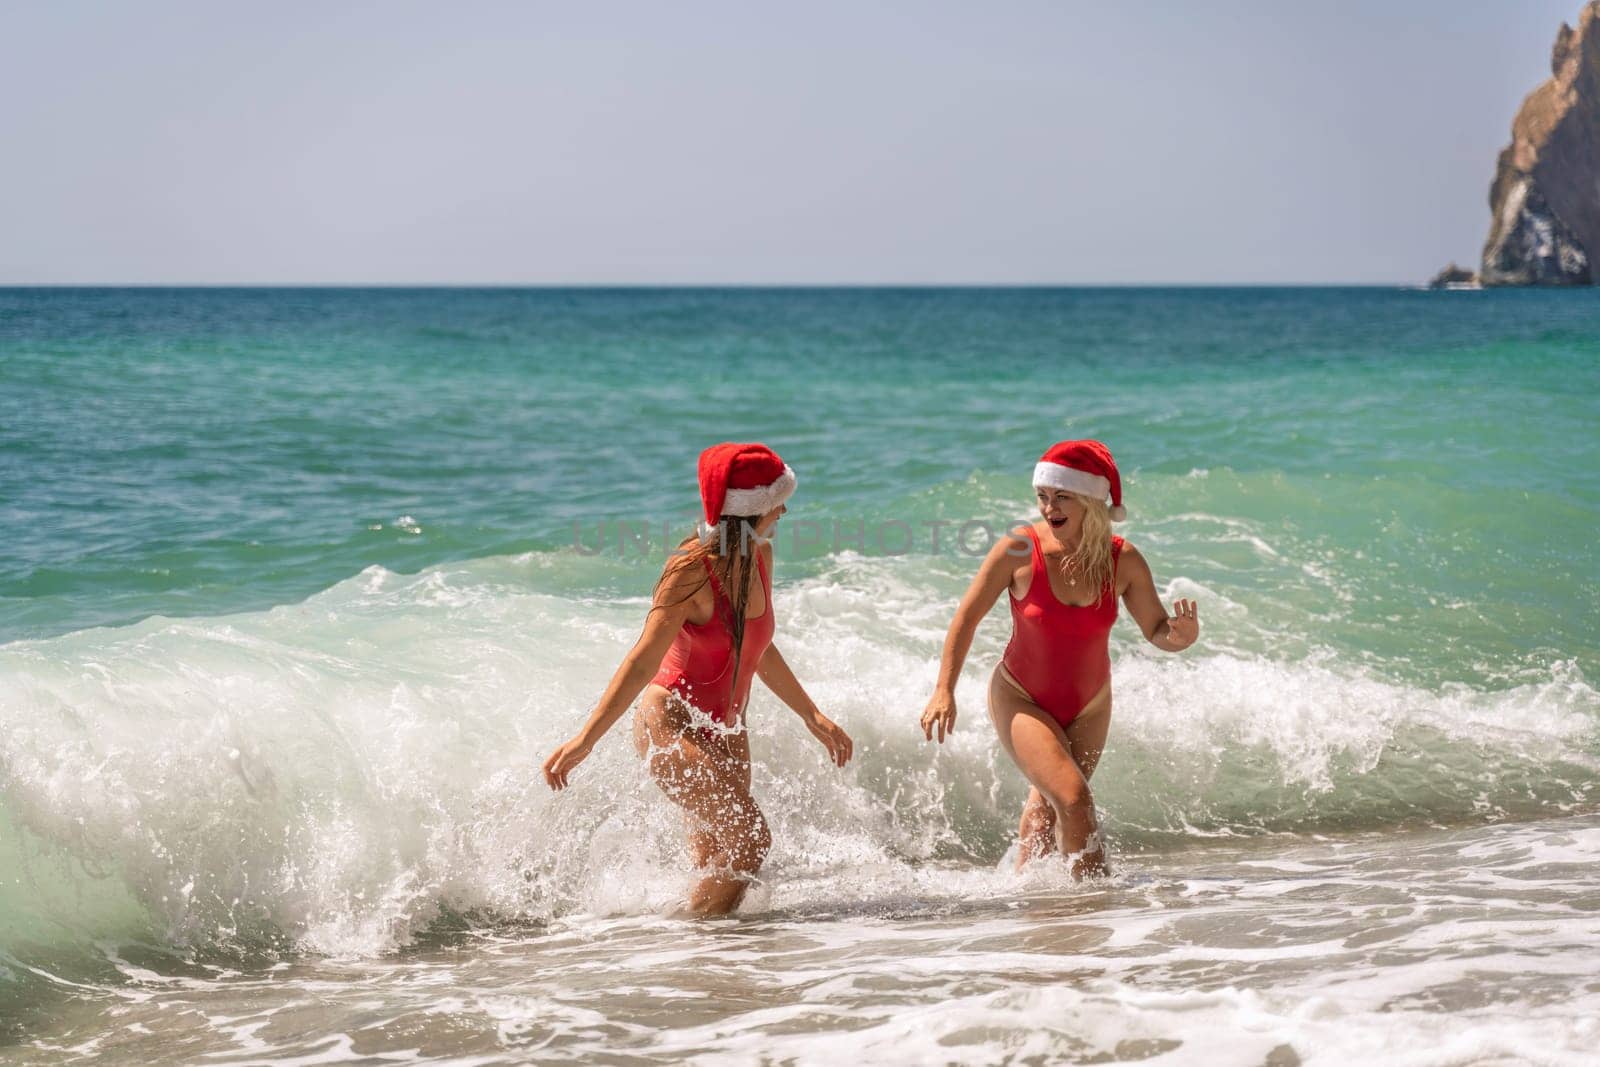 Women Santa hats ocean play. Seaside, beach daytime, enjoying beach fun. Two women in red swimsuits and Santa hats are enjoying themselves in the ocean waves